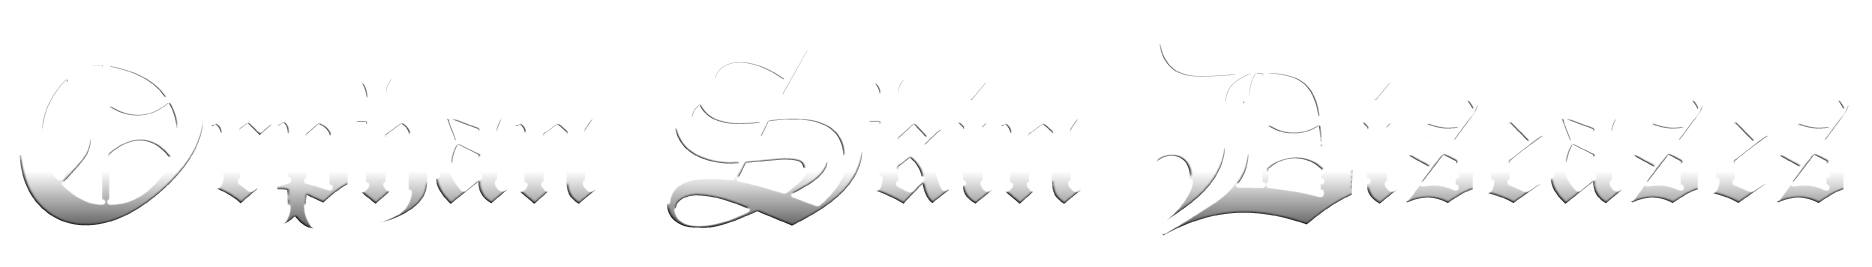 Orphan Skin Diseases Logo